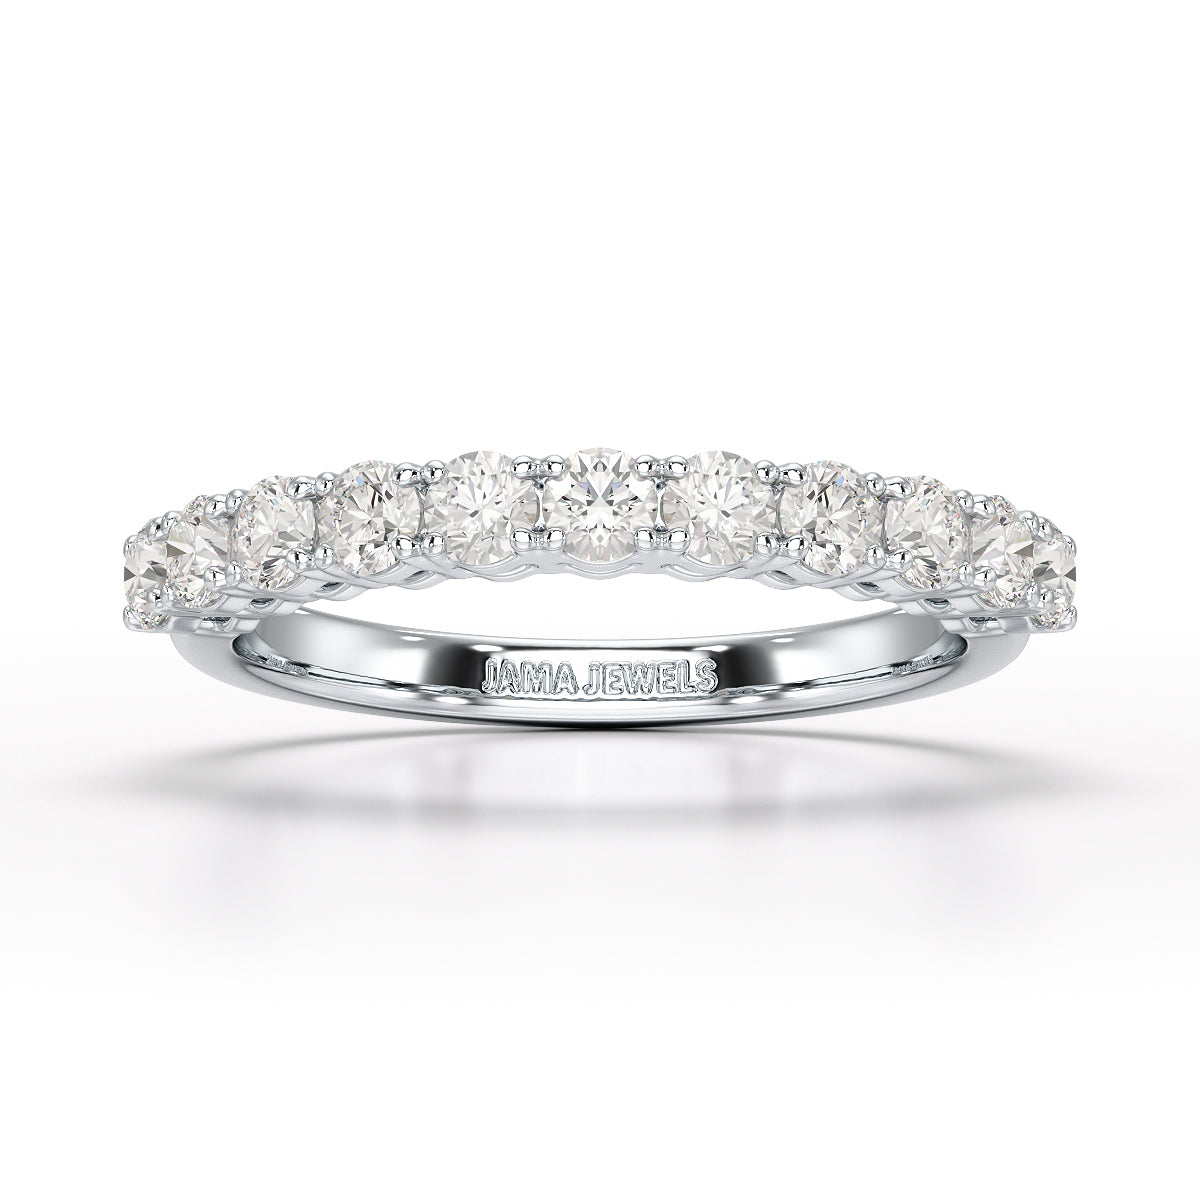 0.8 CT Classic Round Lab Diamonds Engagement Ring